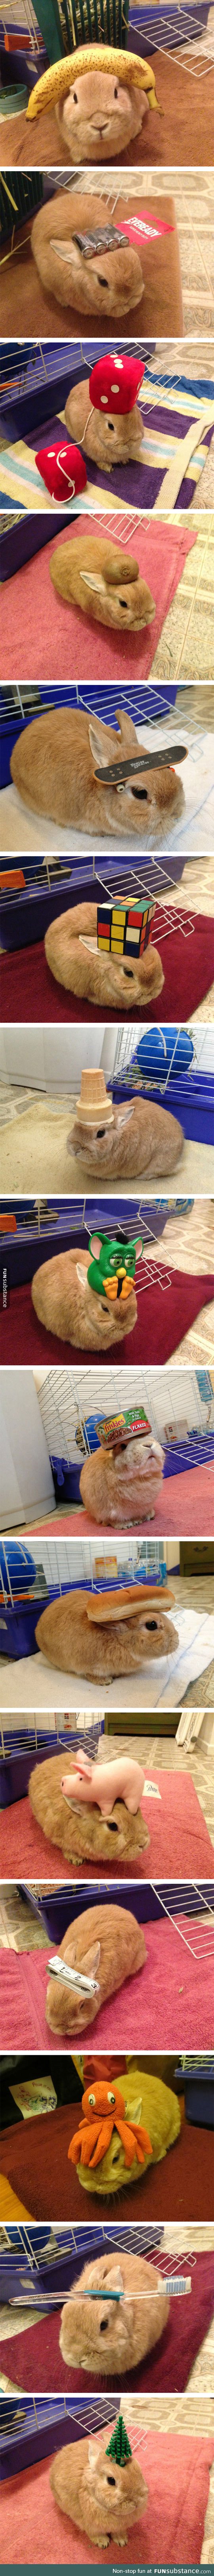 Different stuff on rabbit